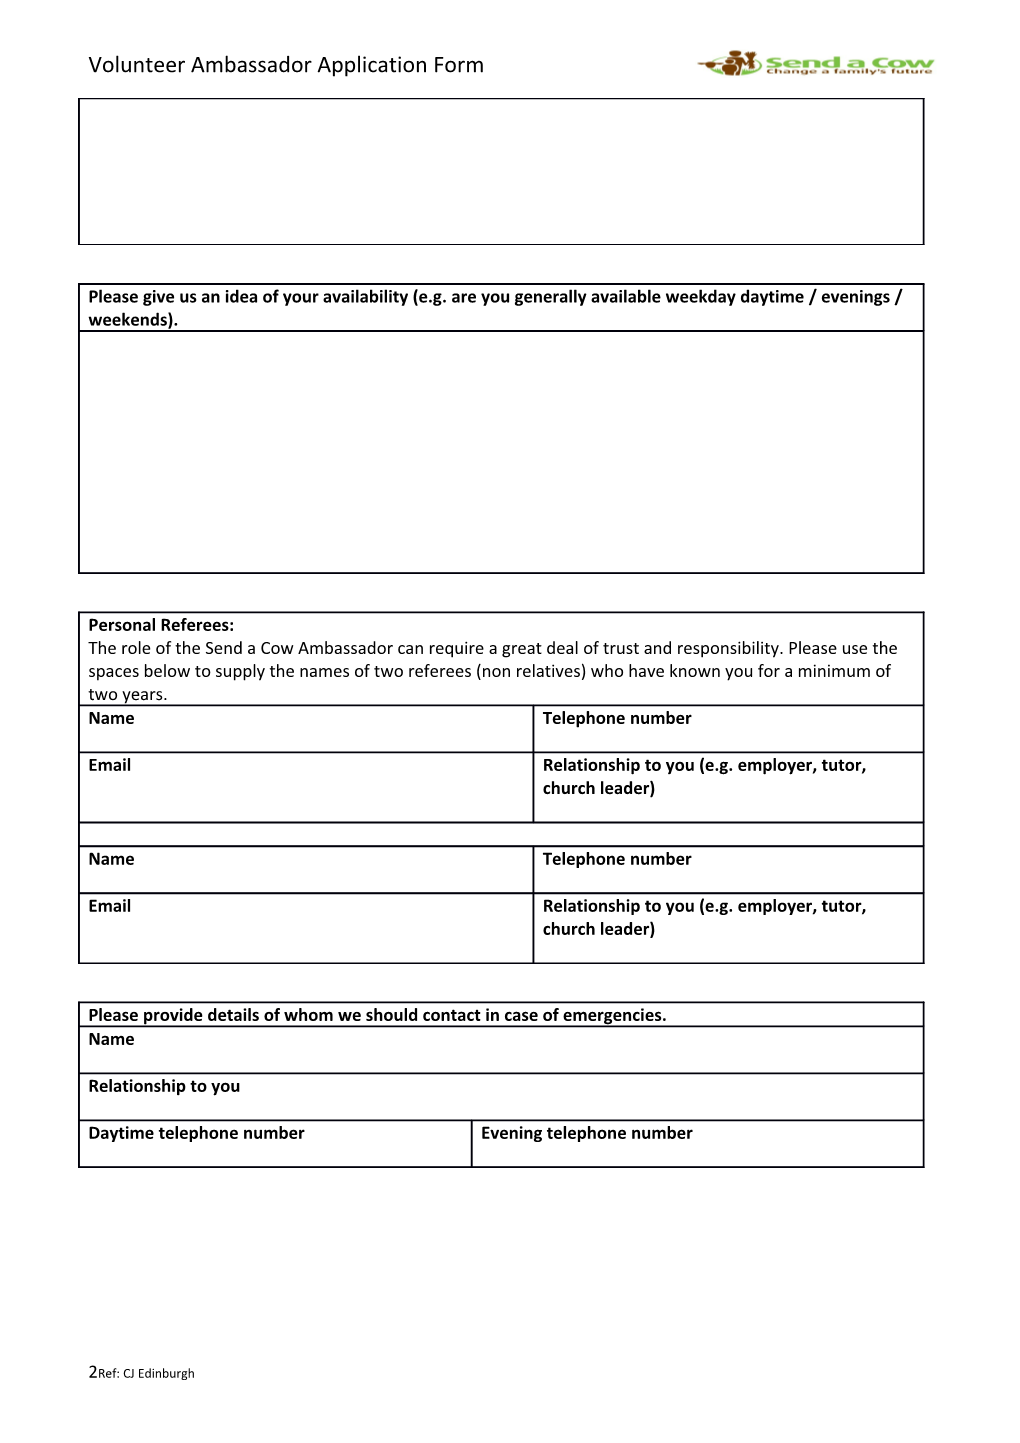 Ambassador Application Form 2015